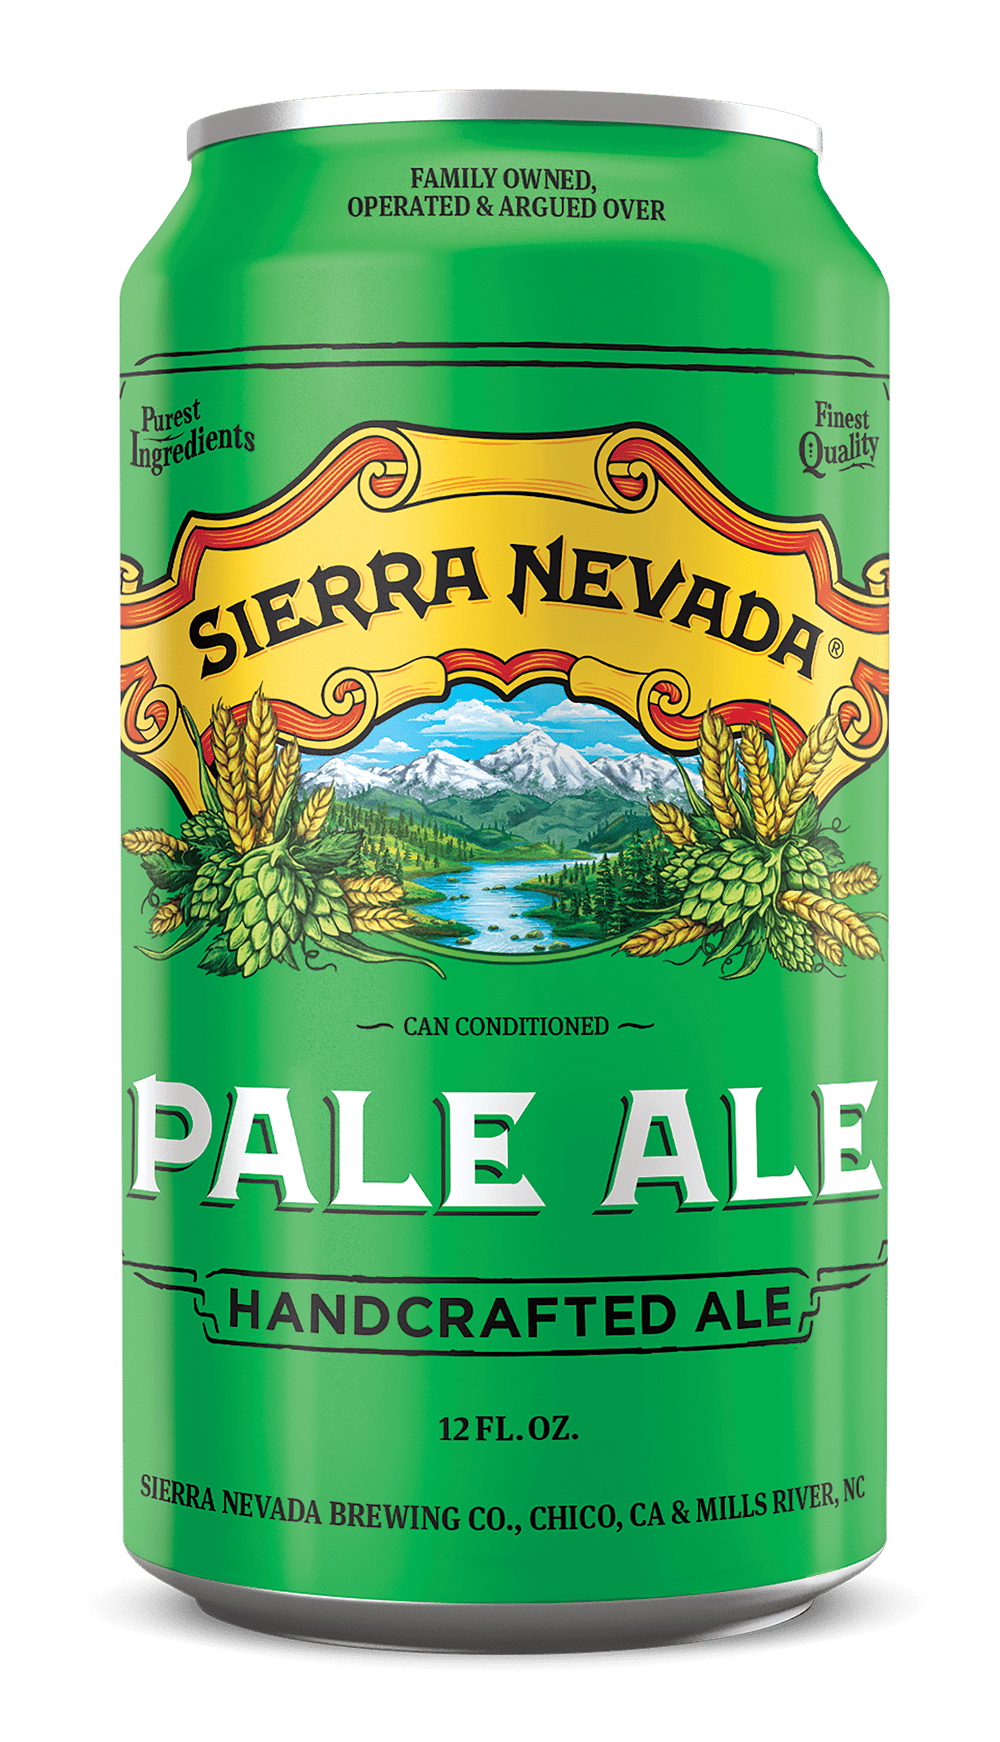 Sierra Nevada Pale Ale 355ml- Handcrafted Pale Ale mit 5,6% Vol.